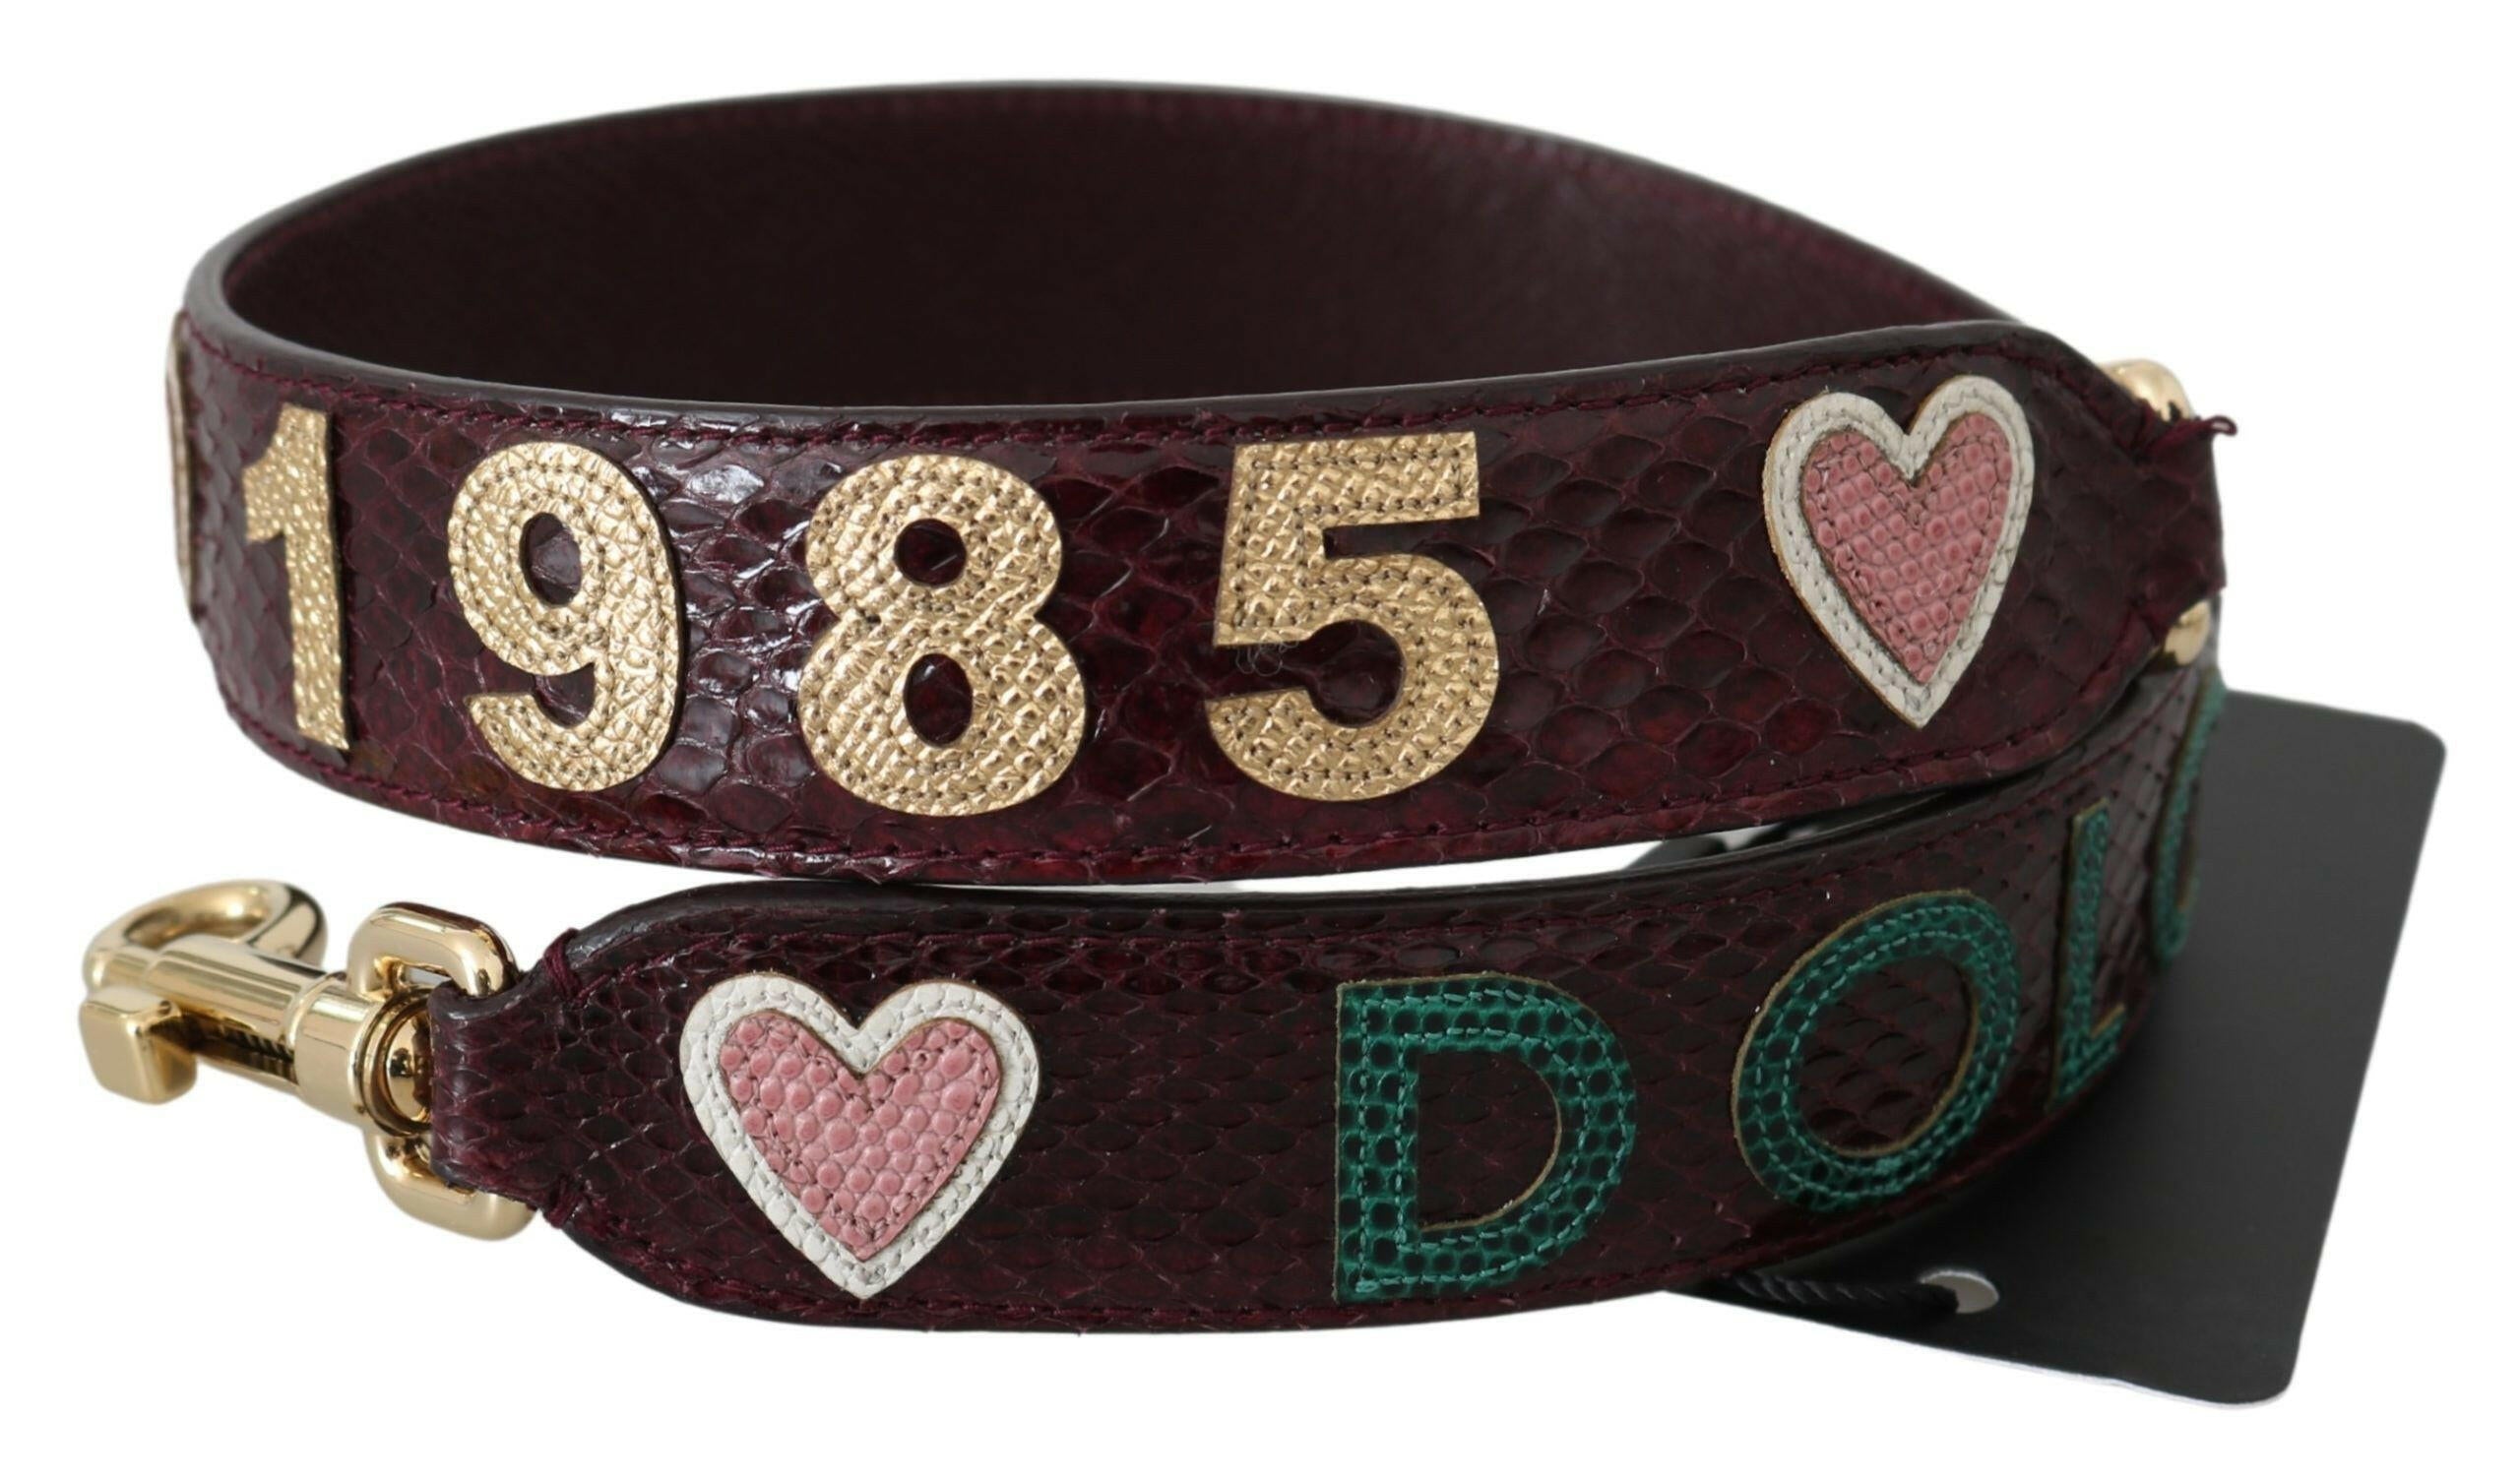 Dolce & Gabbana Bordeaux Exotic Skin Leather Belt Shoulder Strap - GENUINE AUTHENTIC BRAND LLC  